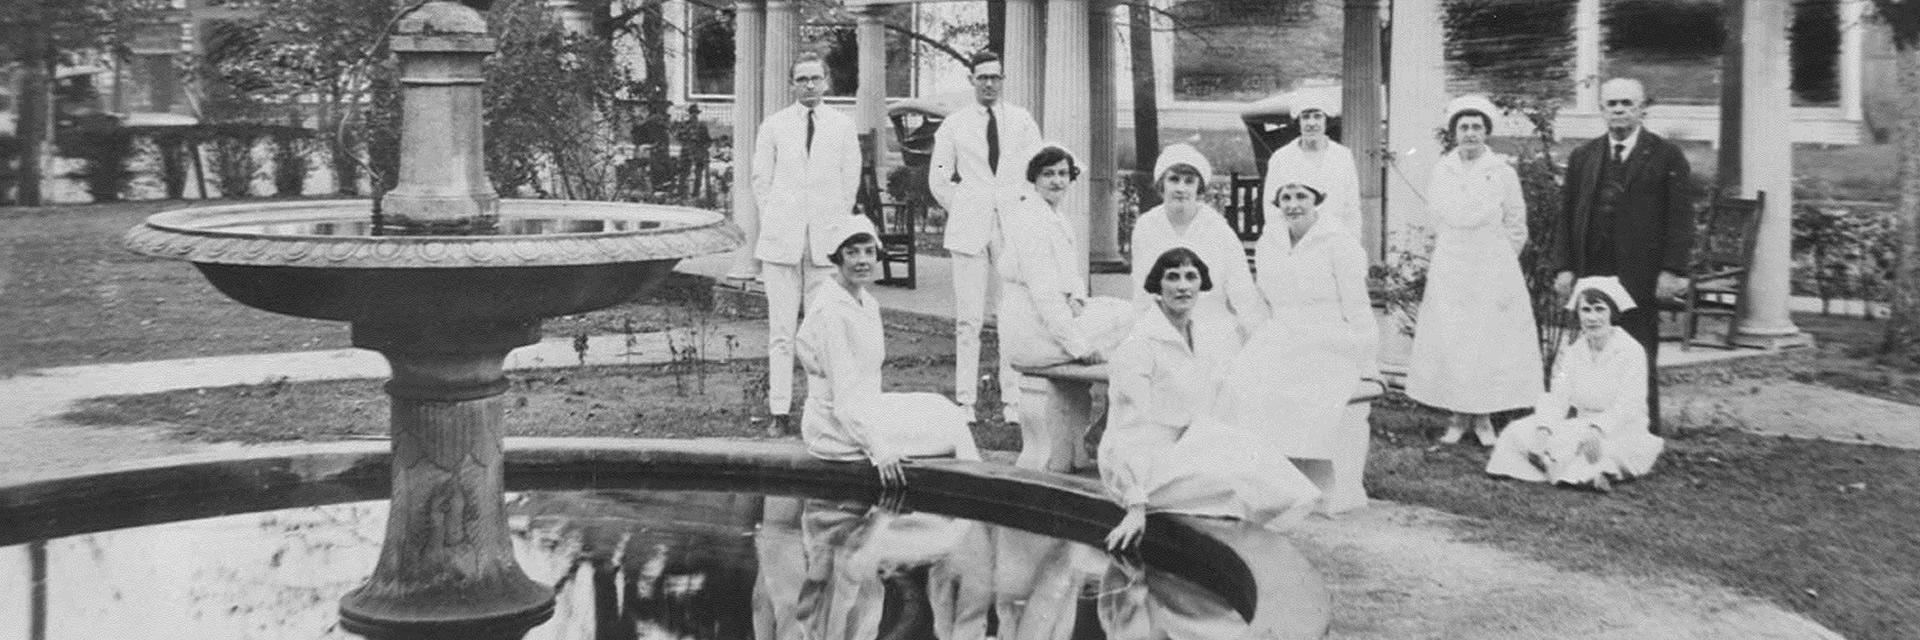 nurses and doctors 1925